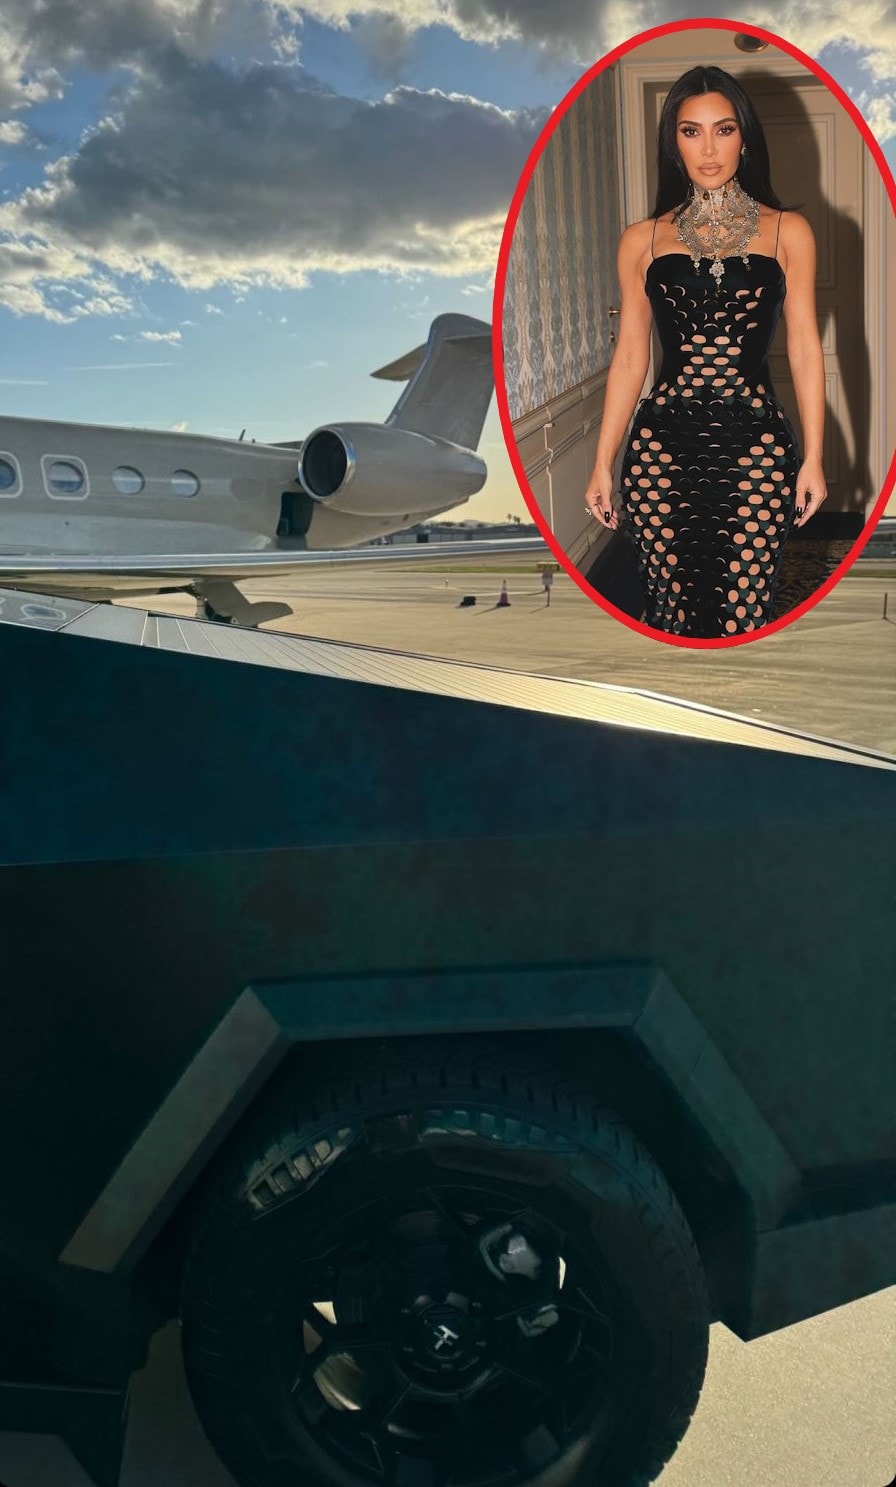 https://s1.cdn.autoevolution.com/images/news/kim-kardashian-parks-her-brand-new-cybertruck-next-to-her-150m-private-jet-229167_1.jpg